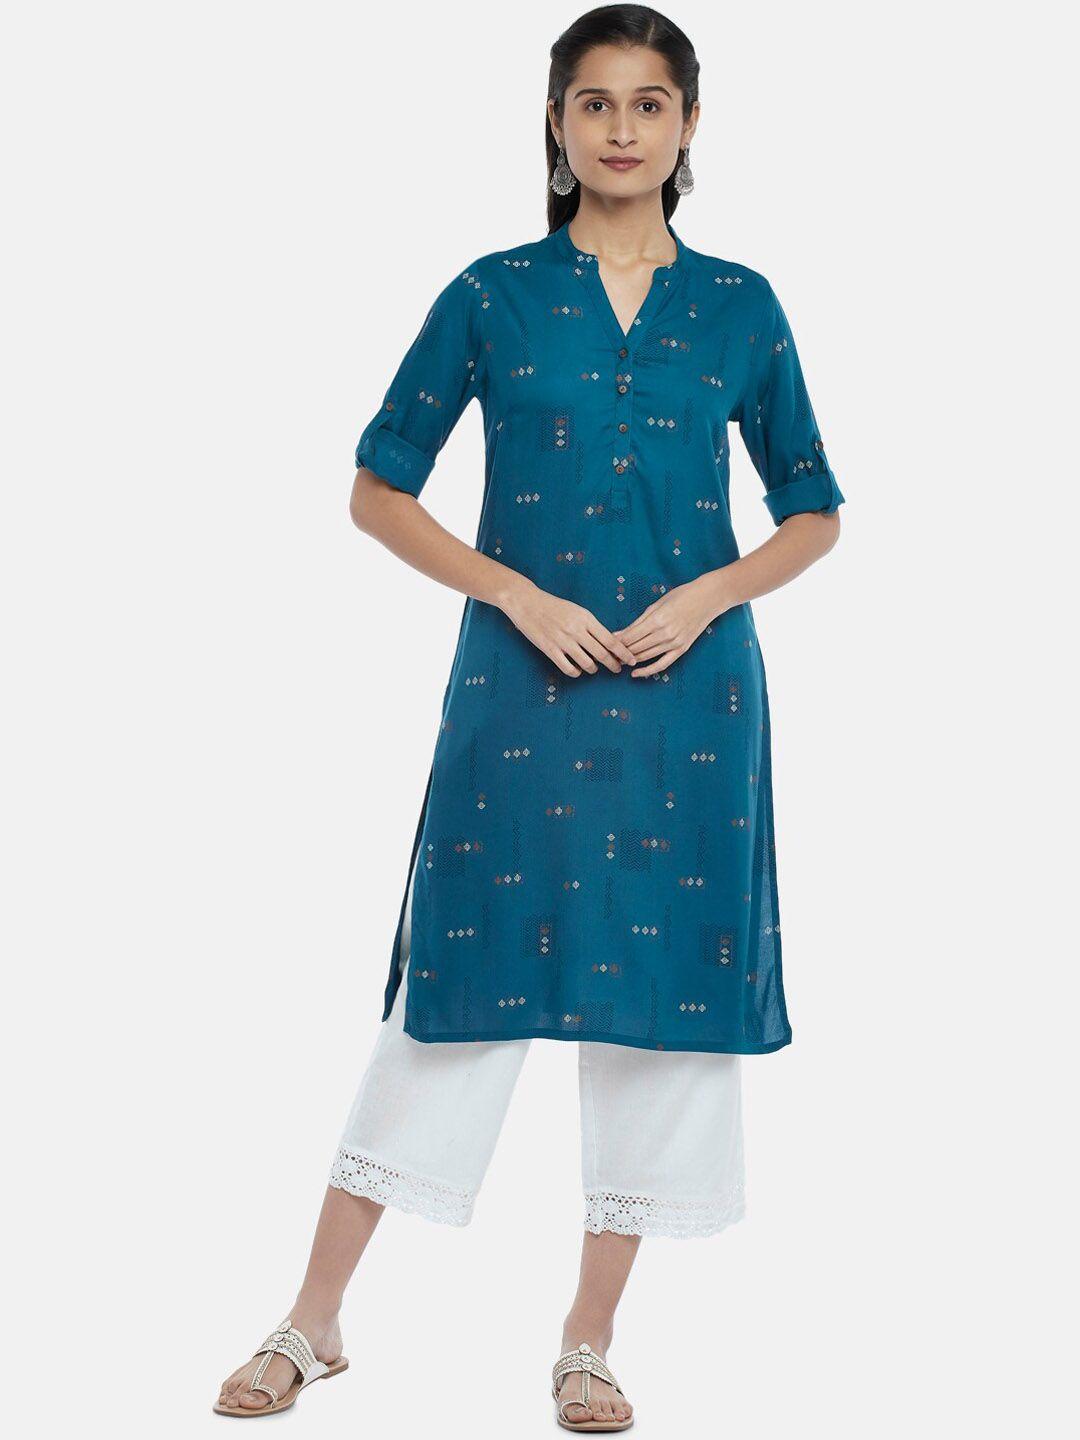 rangmanch by pantaloons women teal blue printed kurta